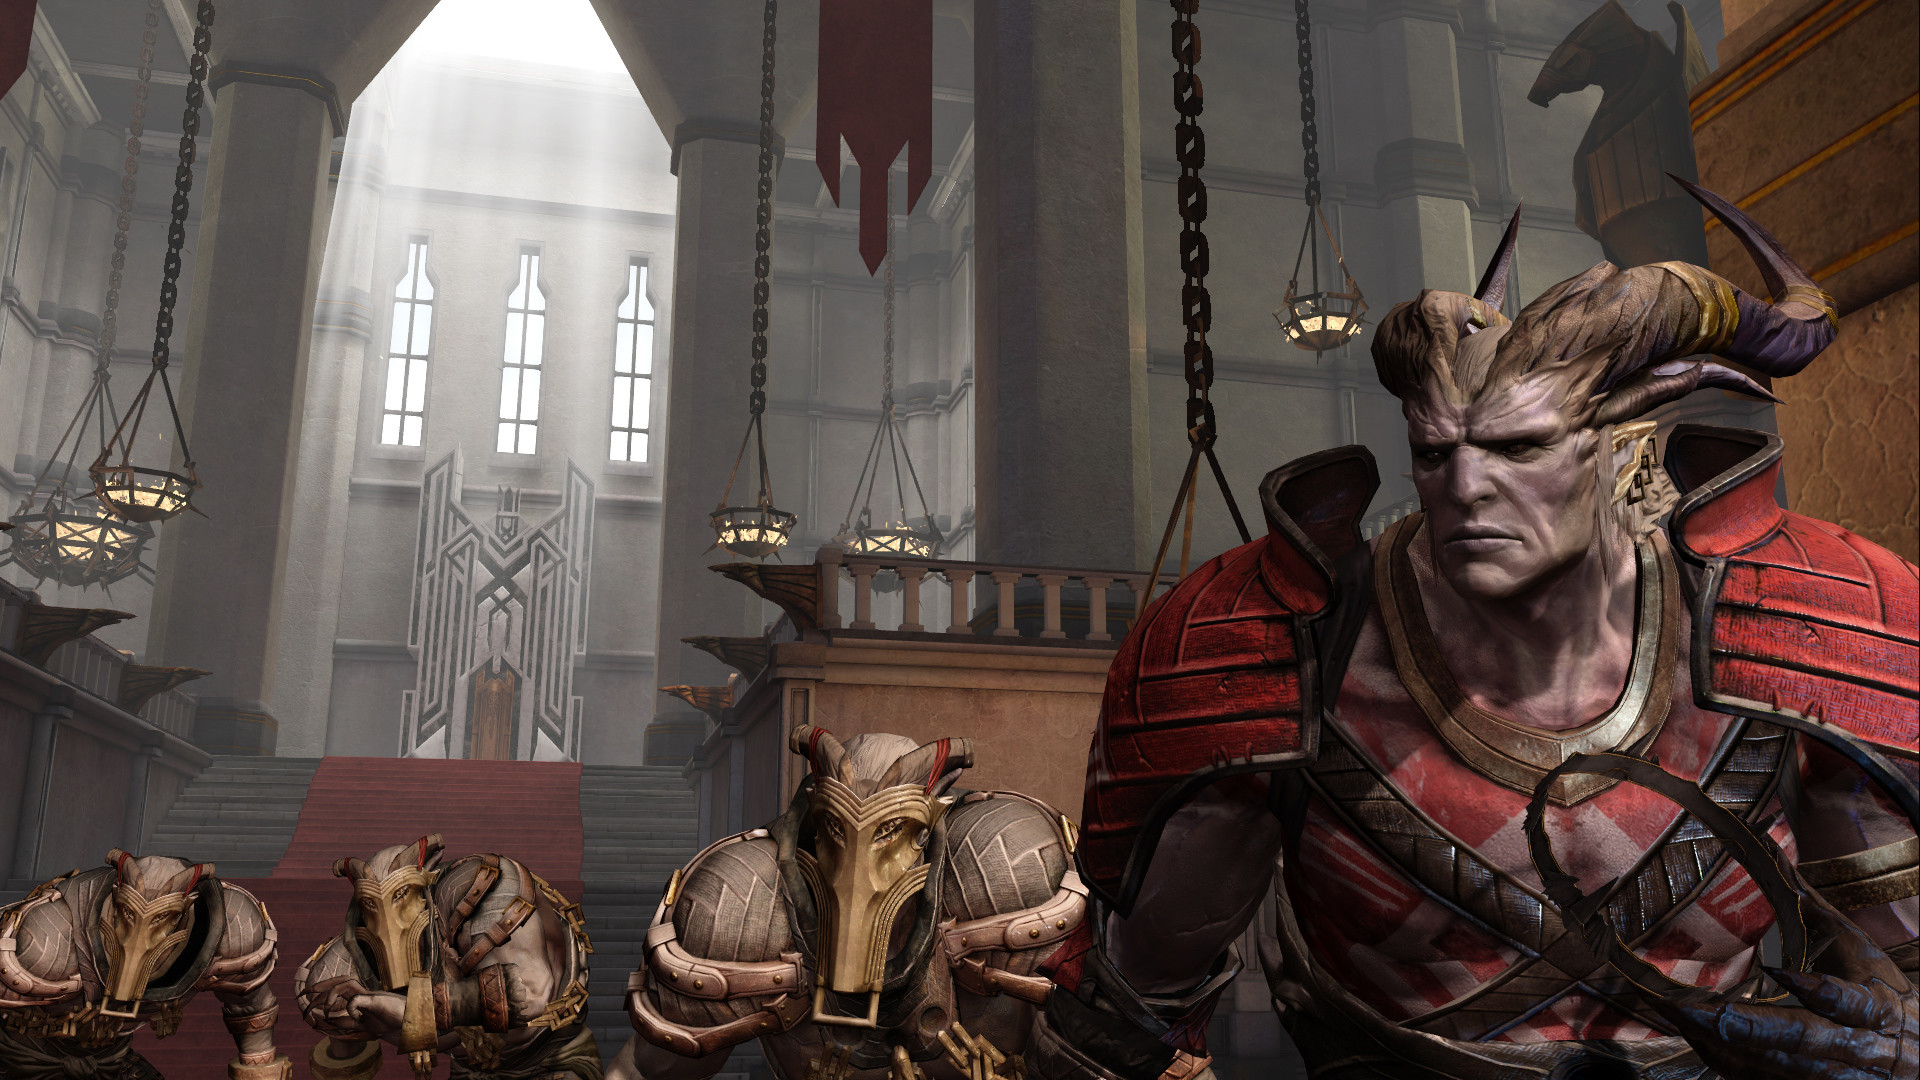 Buy Dragon Age: Origins - Ultimate Edition Steam Key GLOBAL